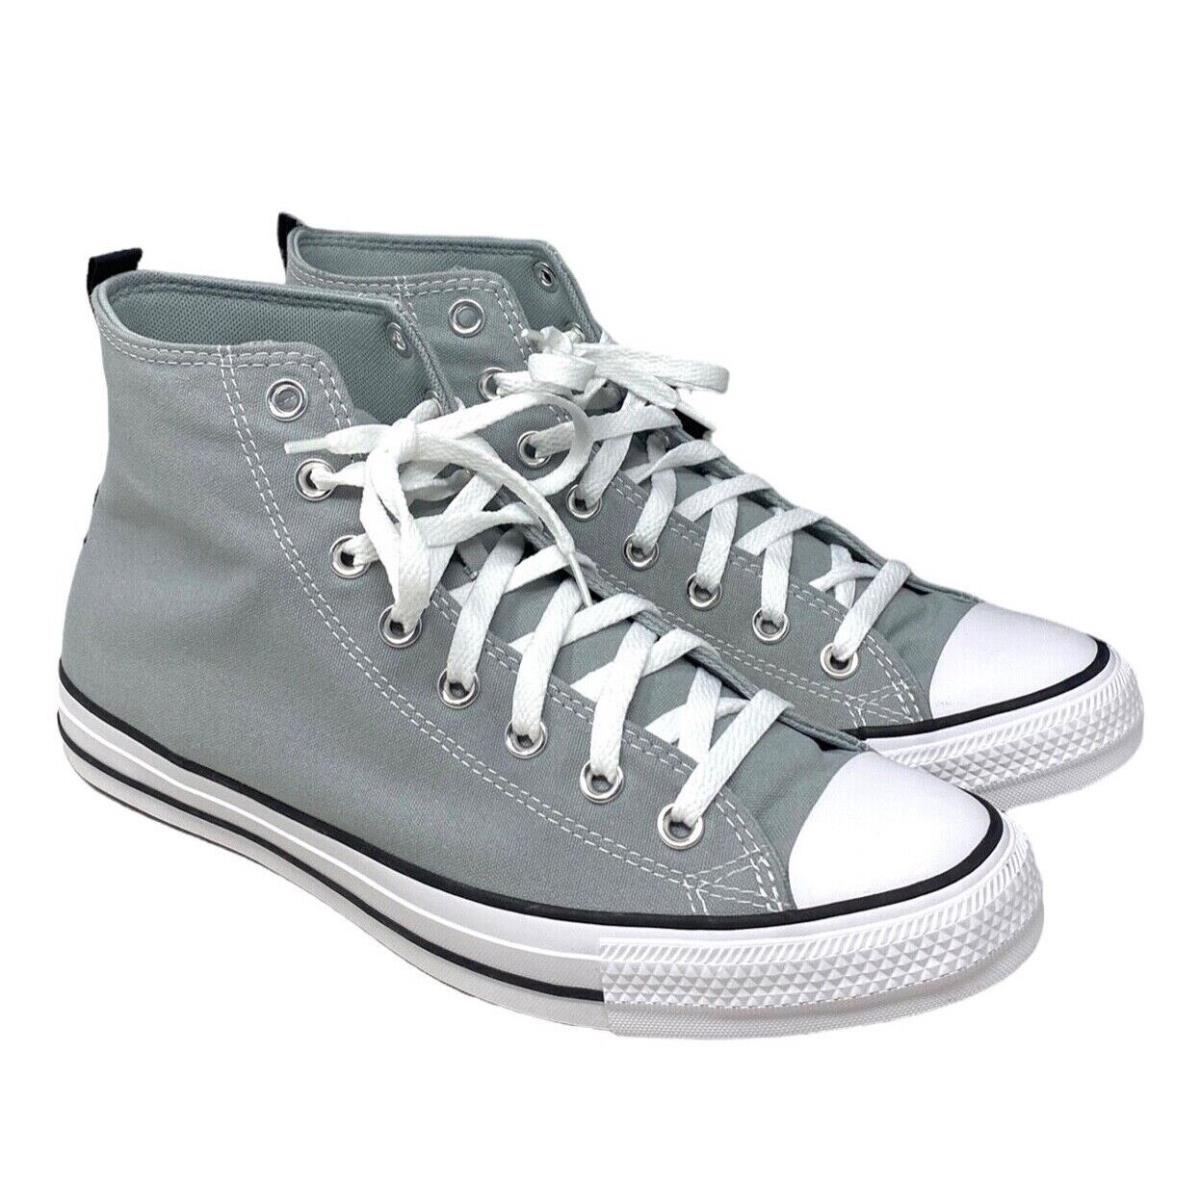 Converse Chuck Taylor Sneakers Casual High Top Canvas Gray Shoes Men s 172016C